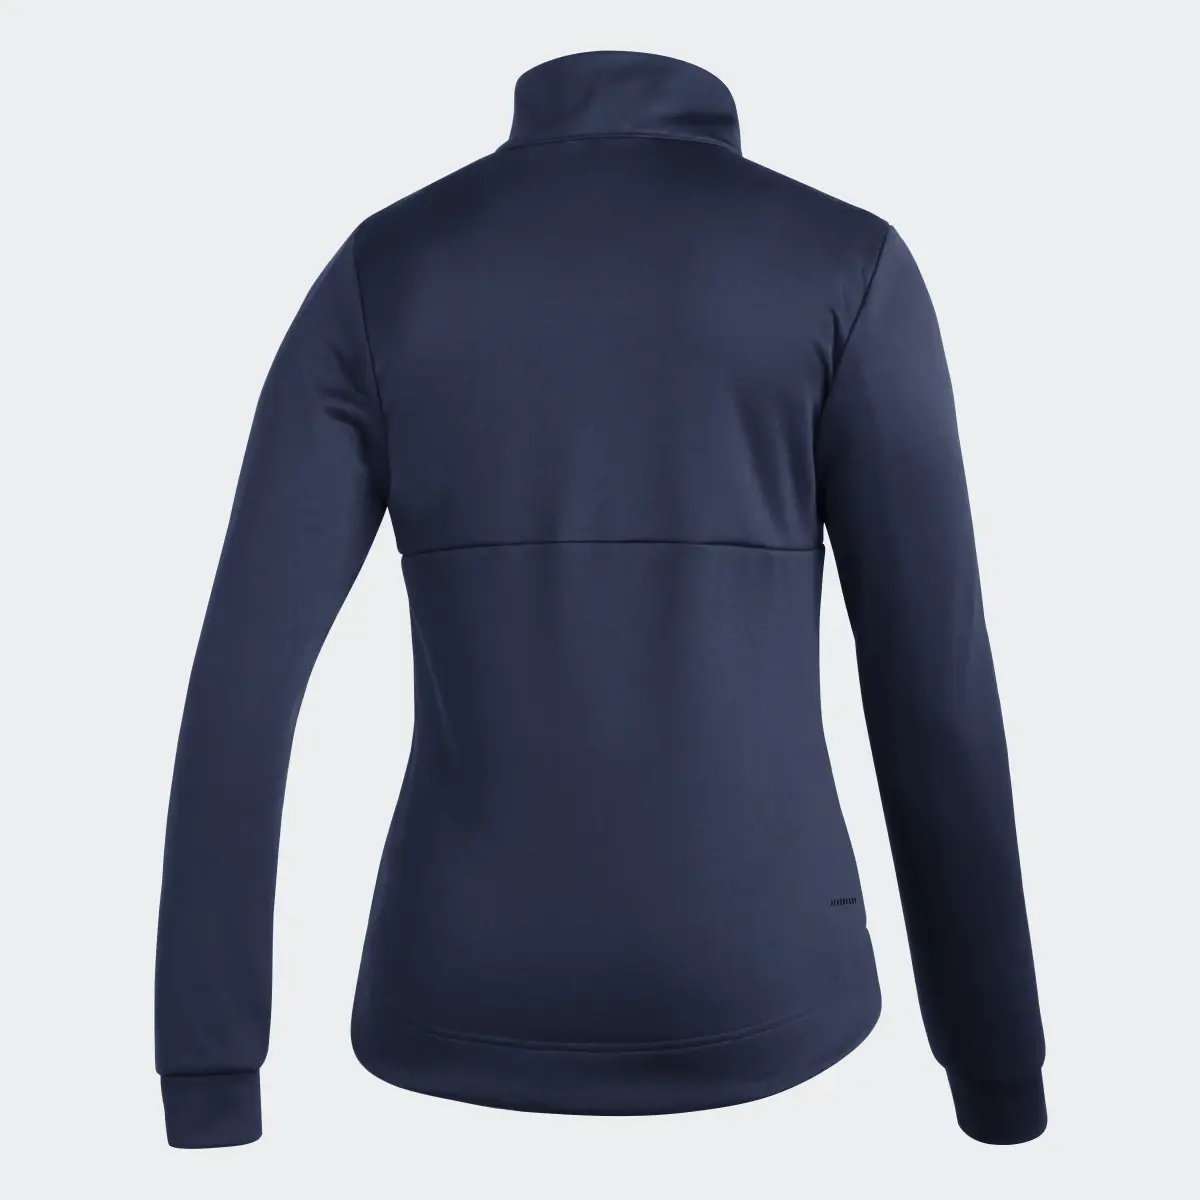 Adidas Team Issue Quarter Zip Sweatshirt. 2